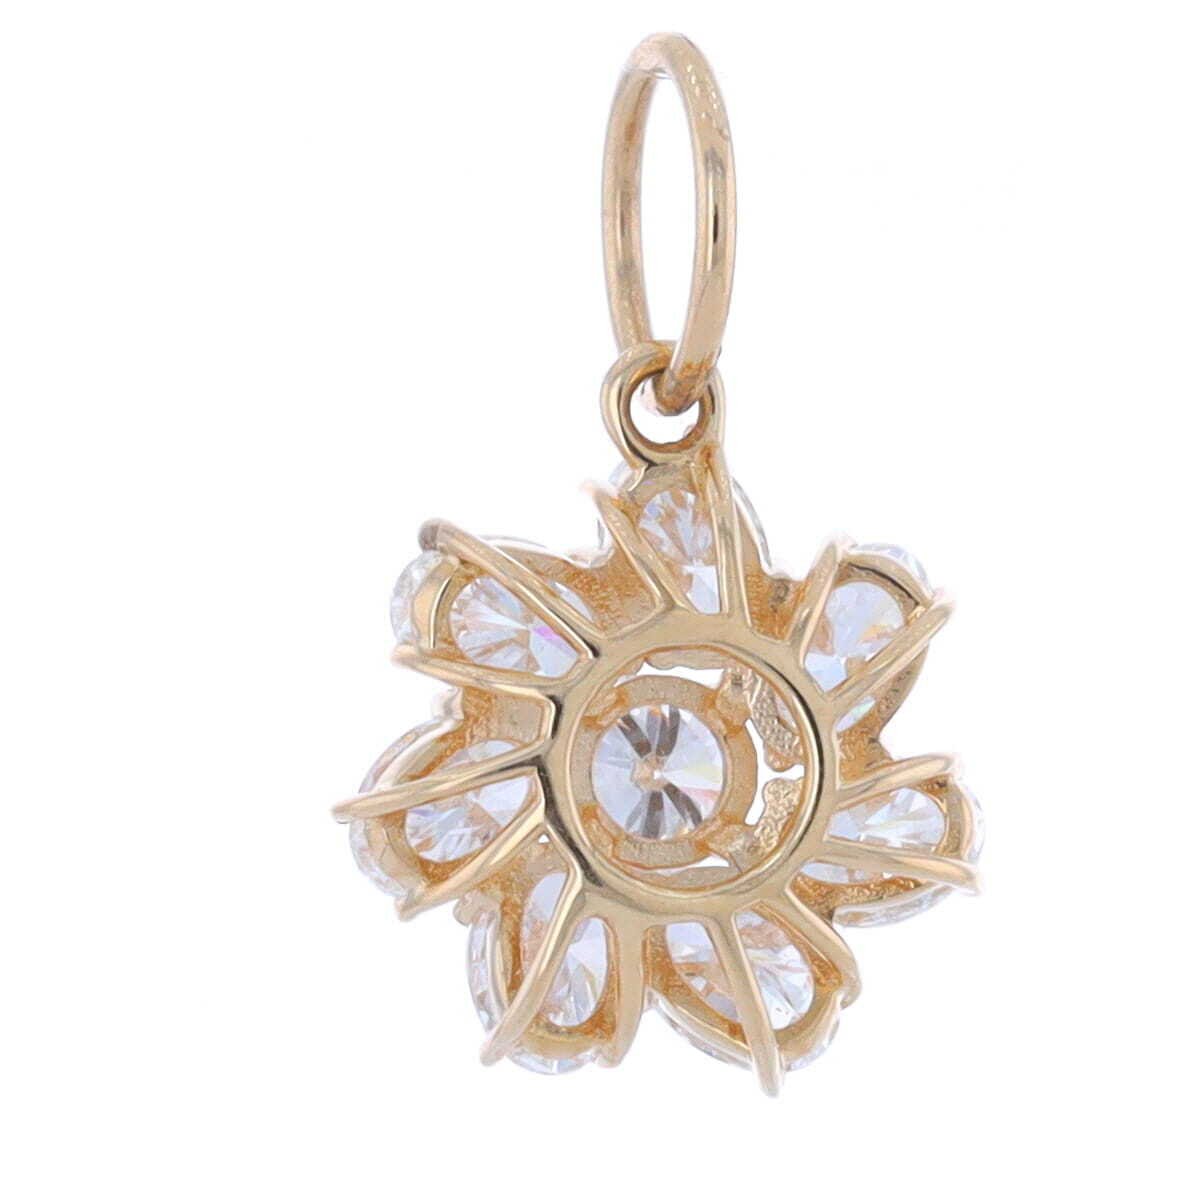 1.97carat Oval Diamond Flower Charm Pendant set in 14k Yellow Gold